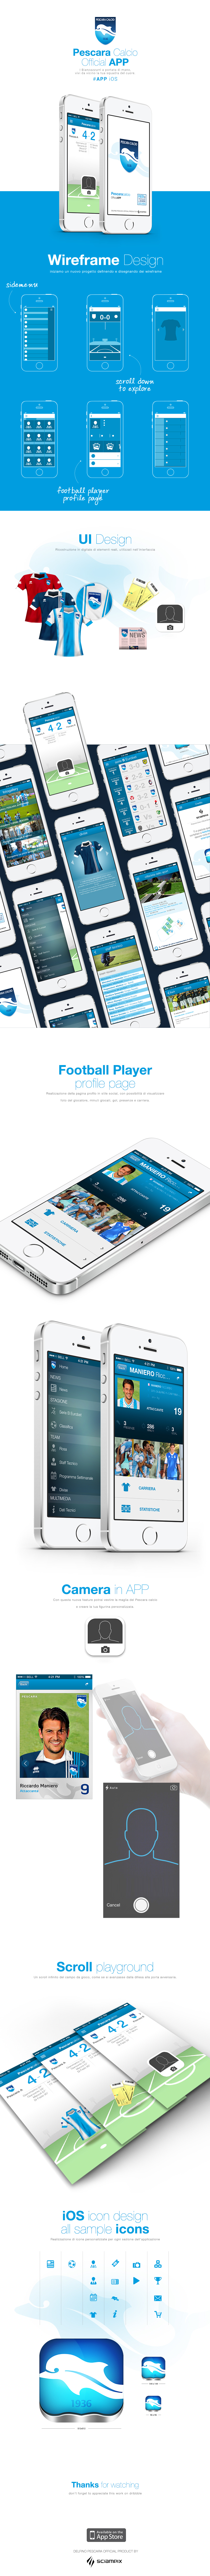 ios apple mobile app app design application ios7 icons flat clean Mobile UI blur interaction presentation redesign